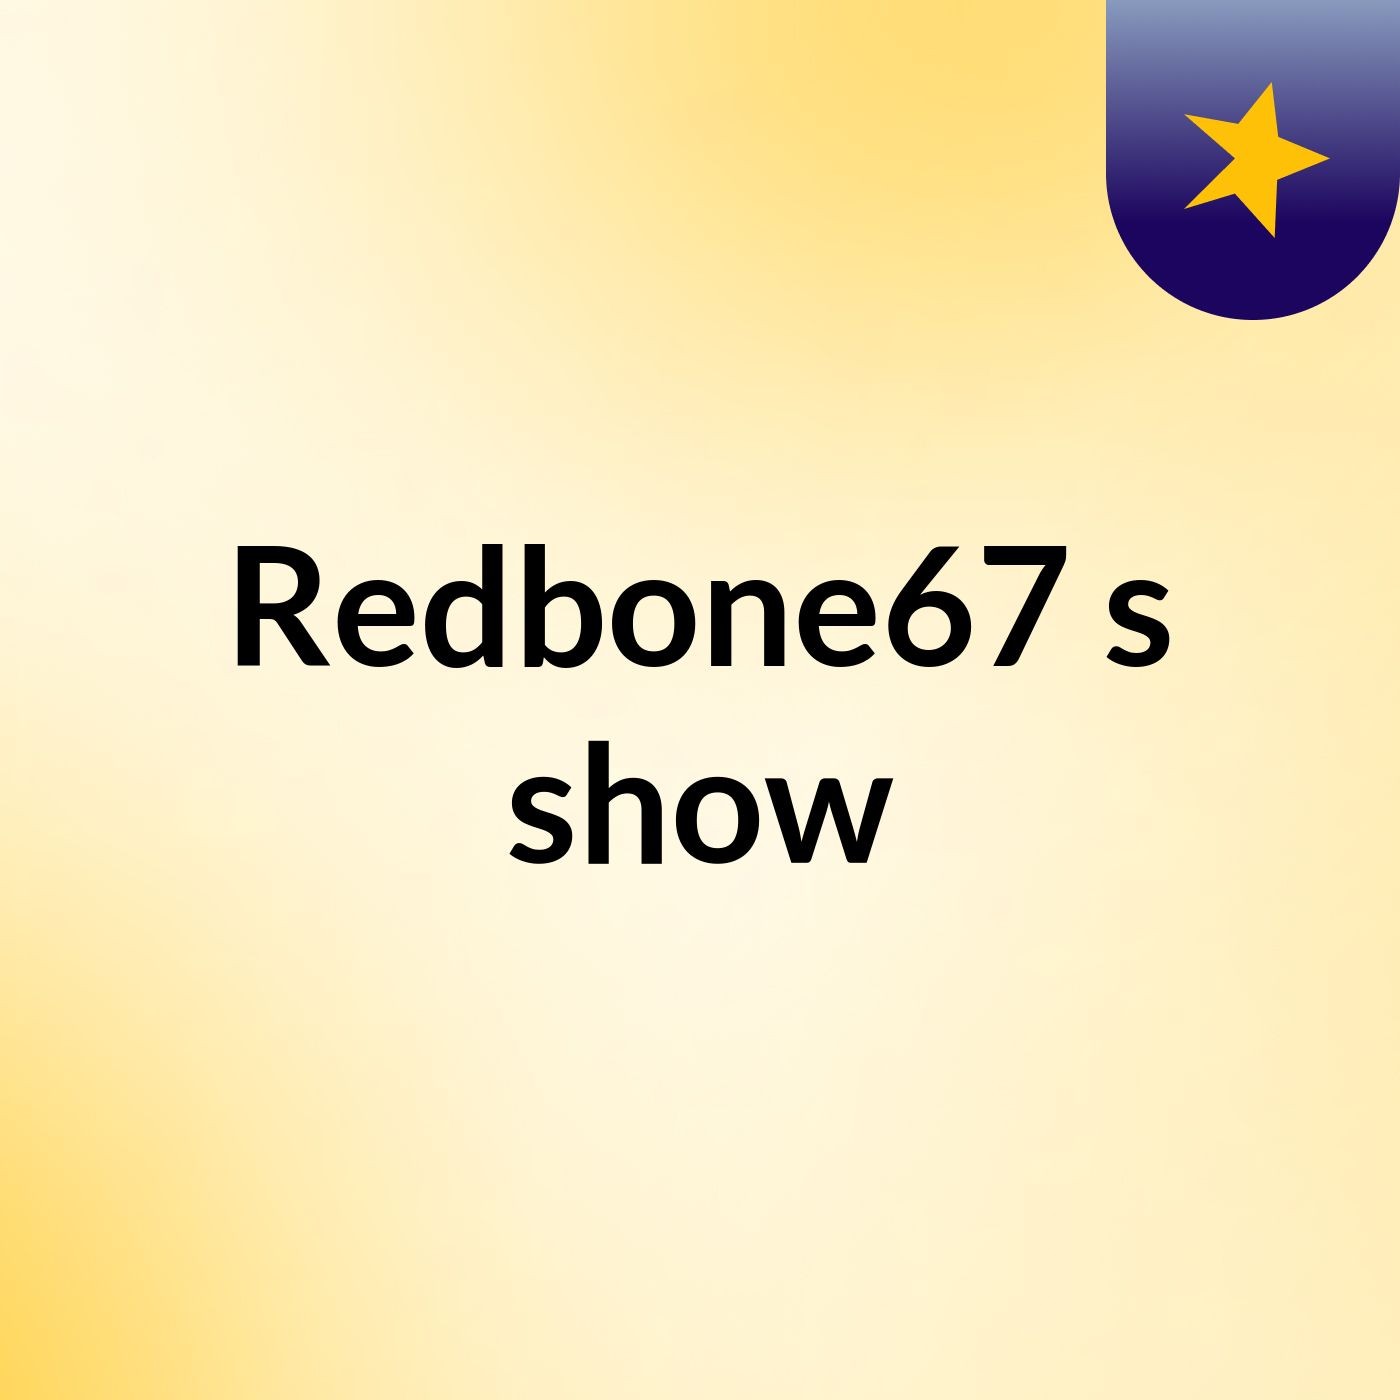 Redbone67's show